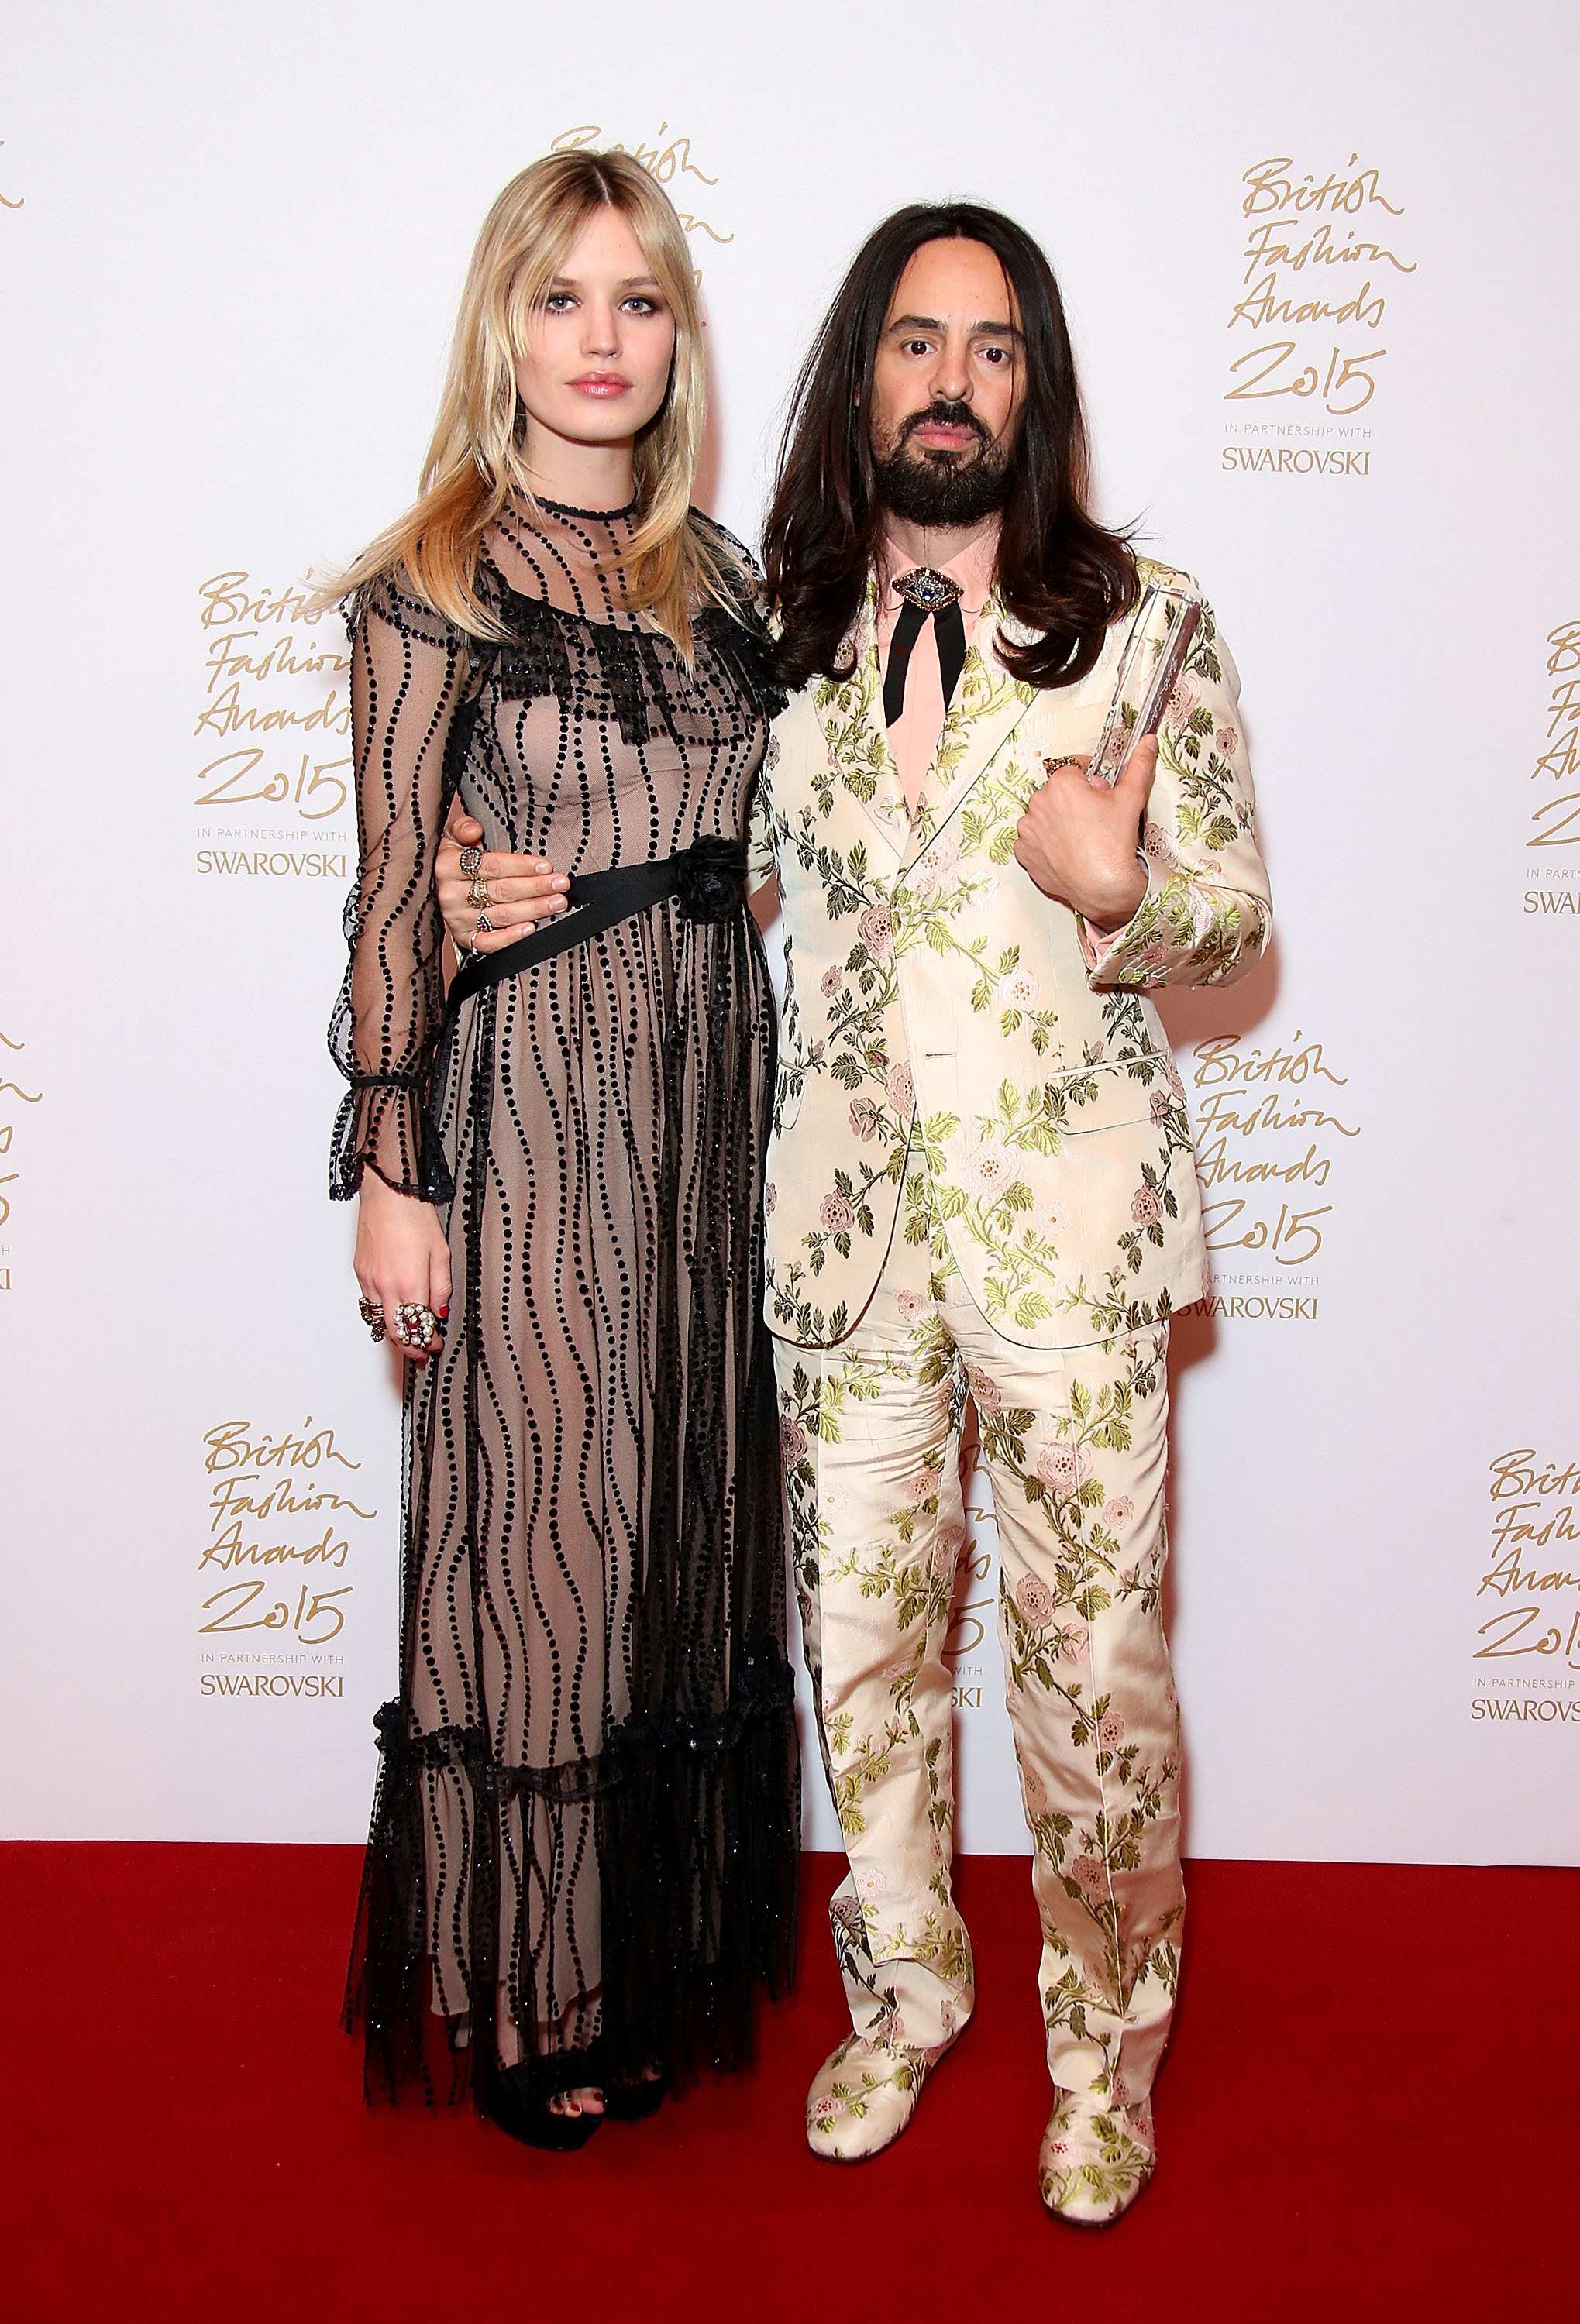 British Fashion Awards 2015: JW Anderson wins designer of the year